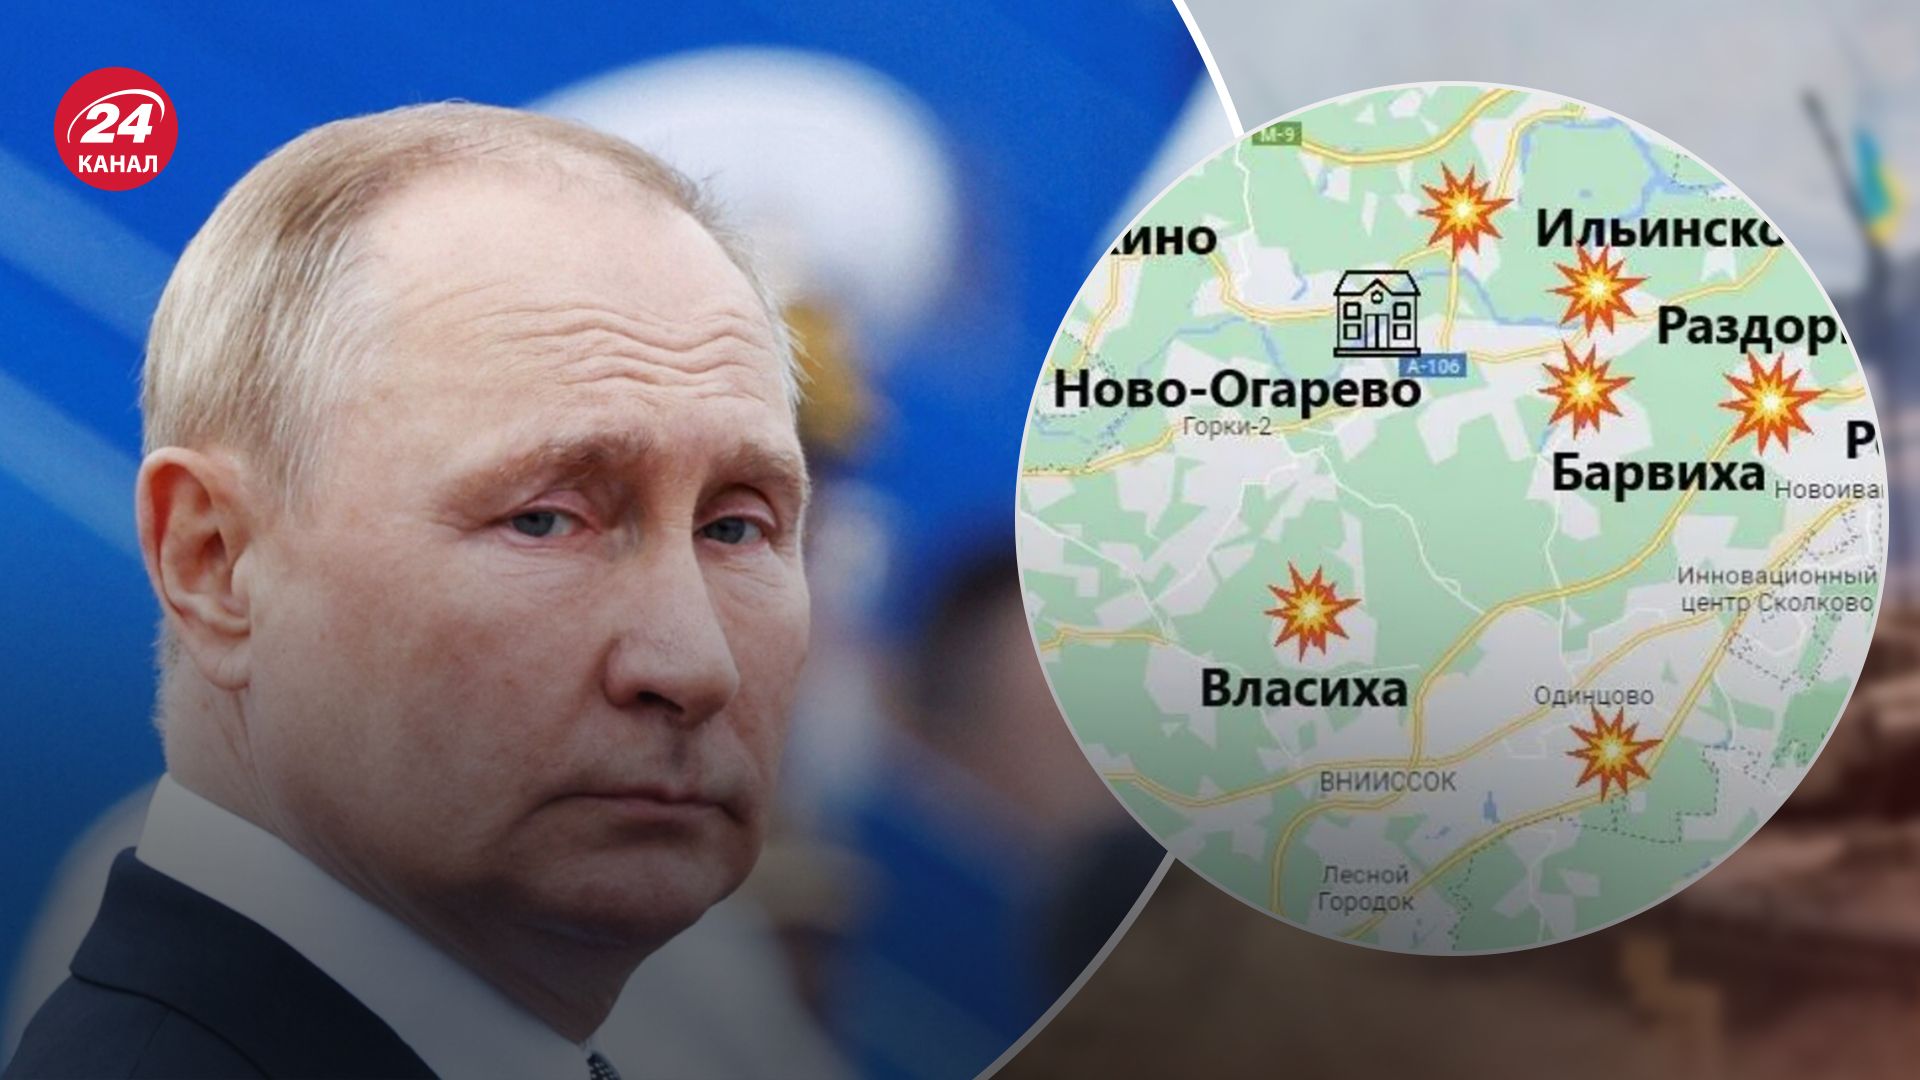 До резиденции Путина оставалось менее 6 км